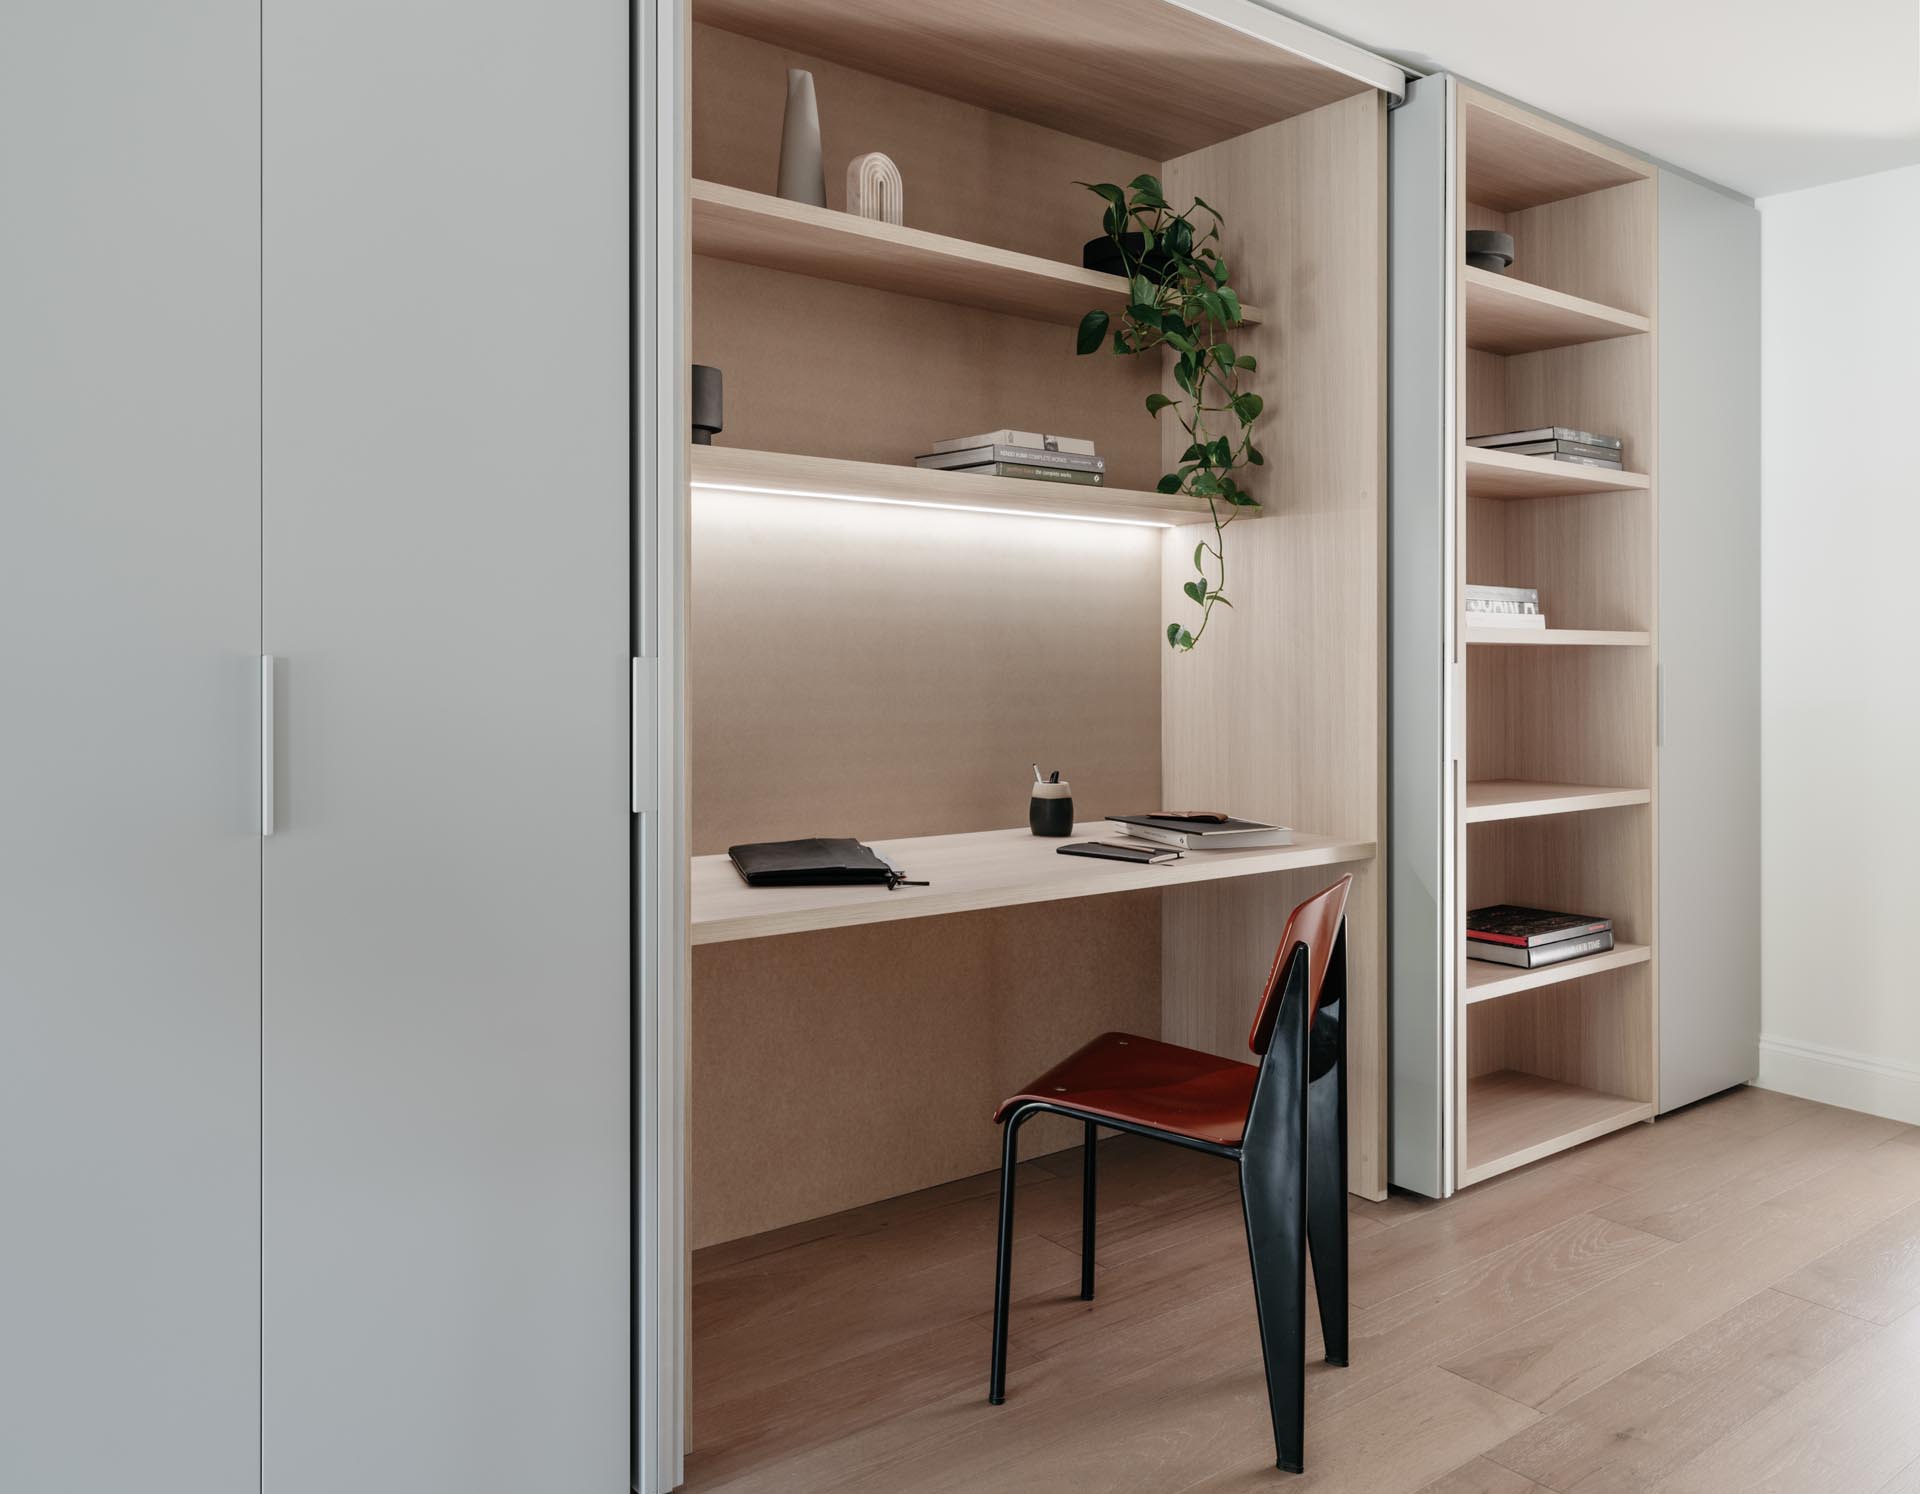 A modern wood-lined home office hidden within a closet.